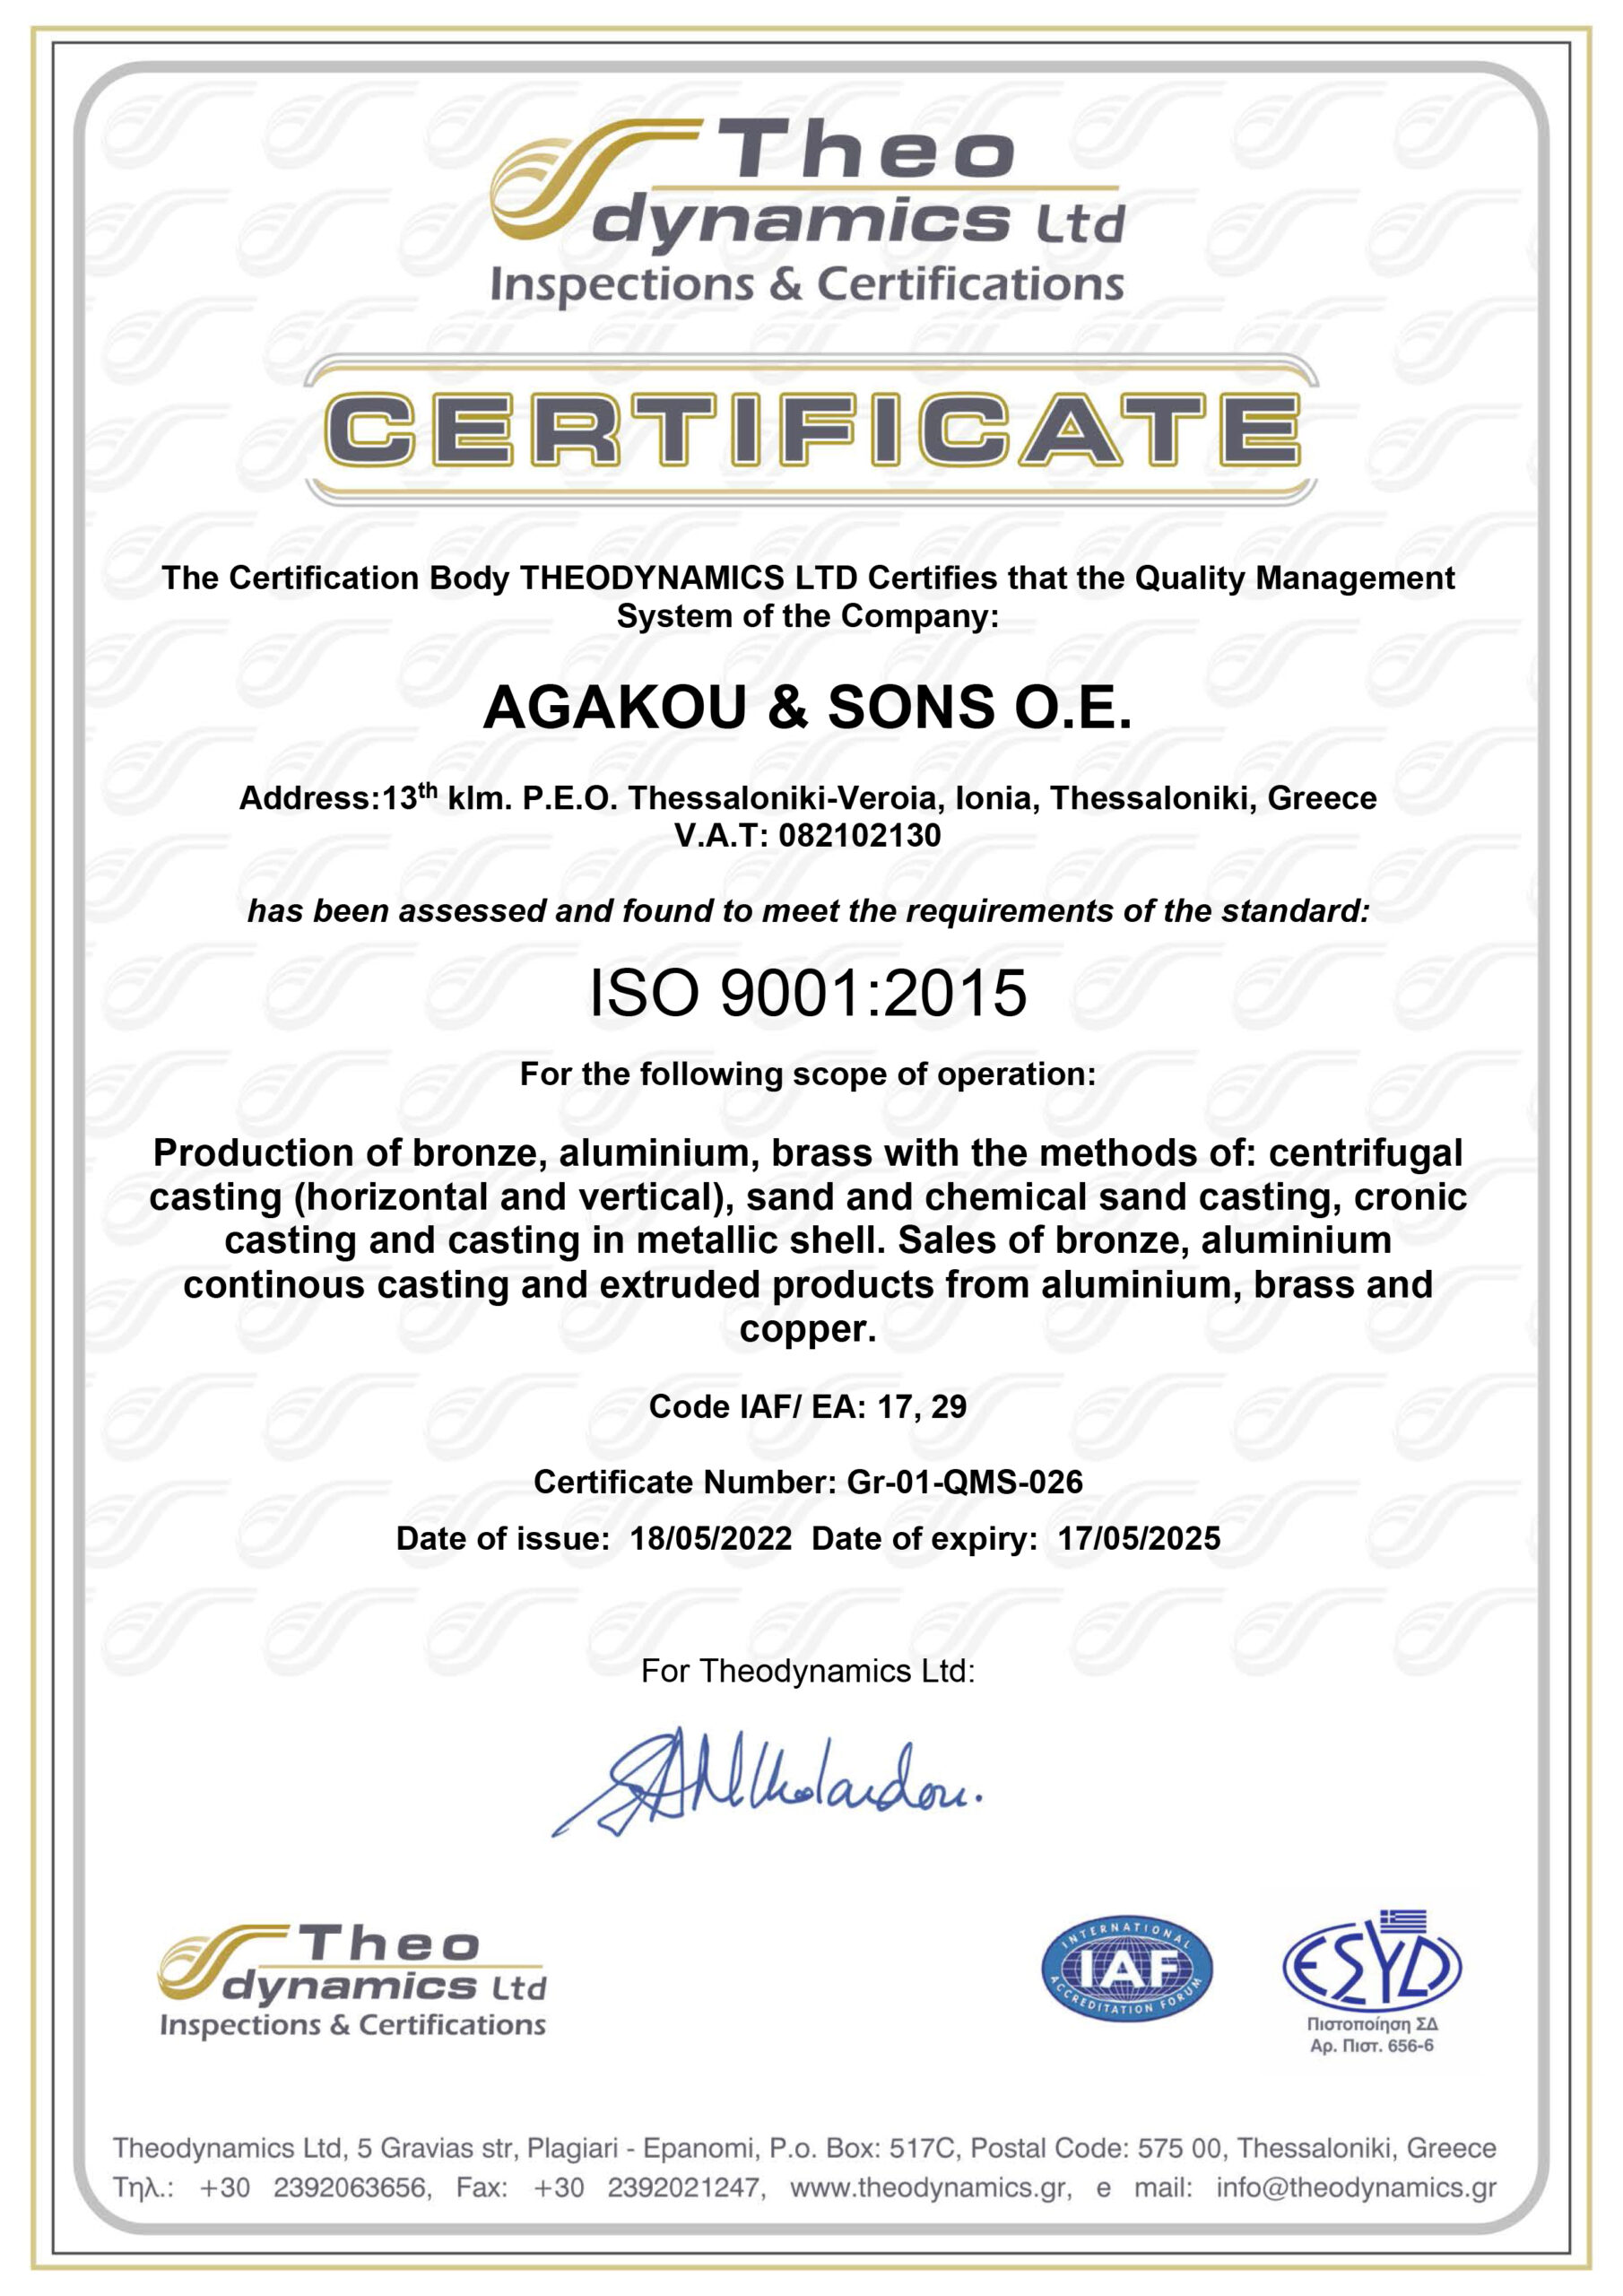 Theo dynamics LTD Certificate